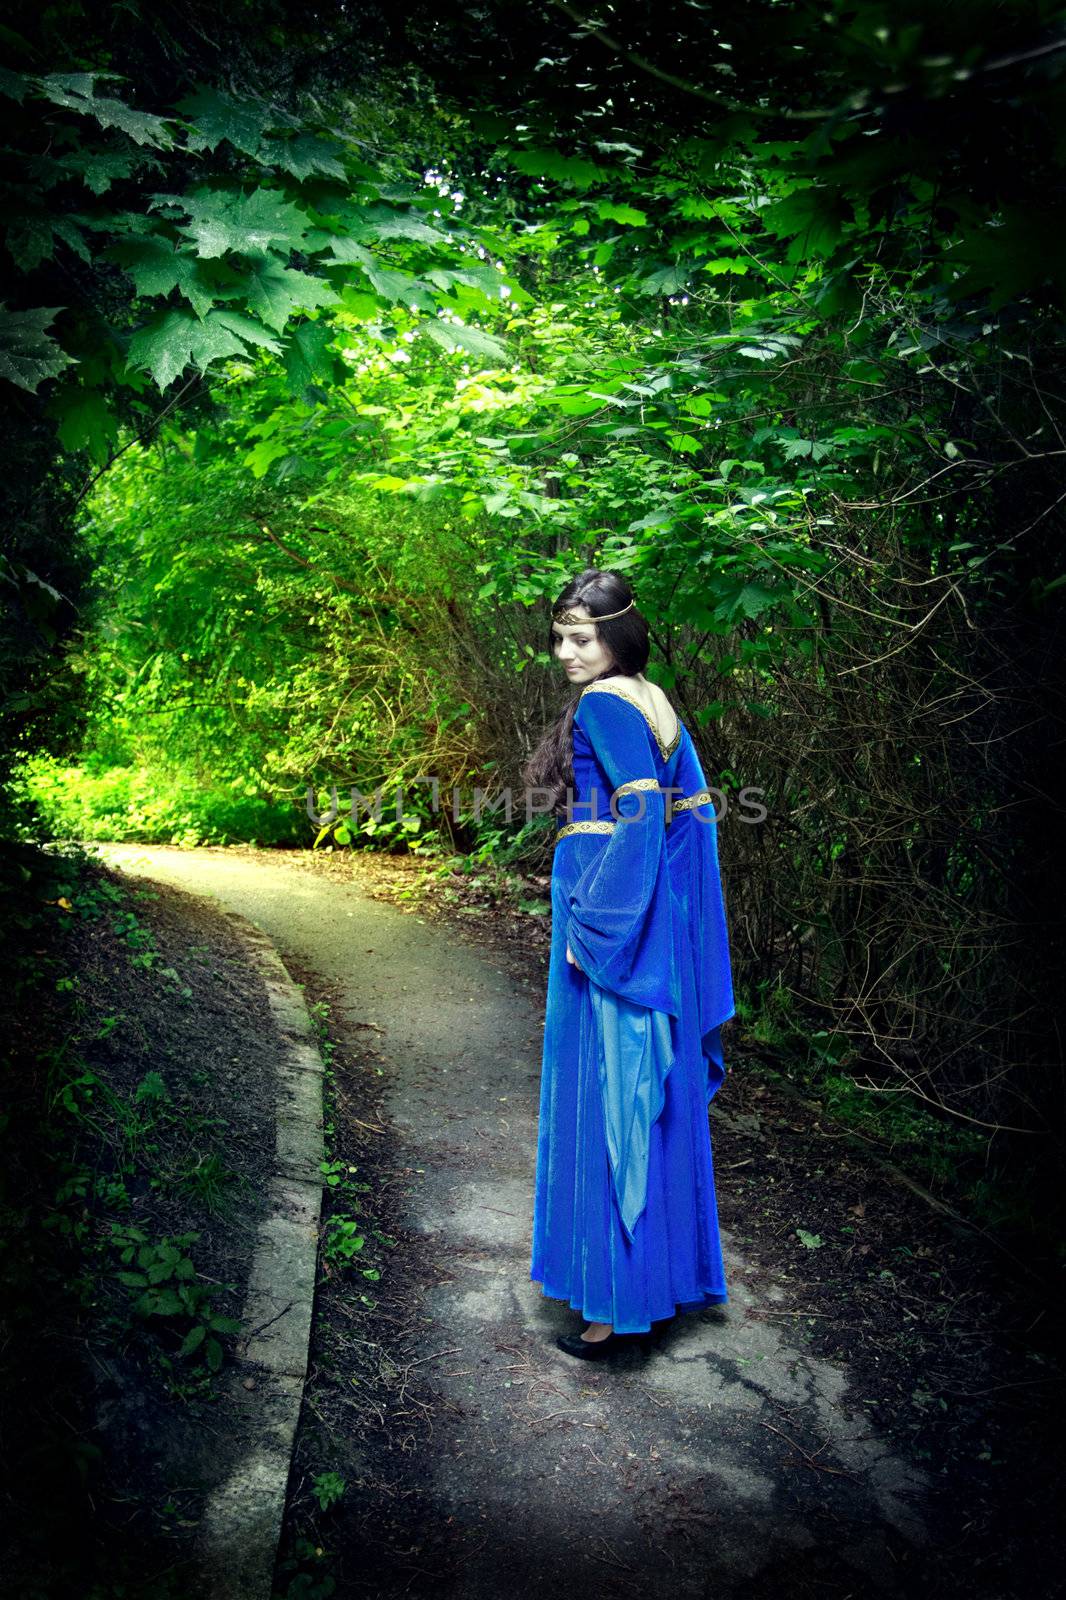 princess walk through darkest forest by petr_malyshev